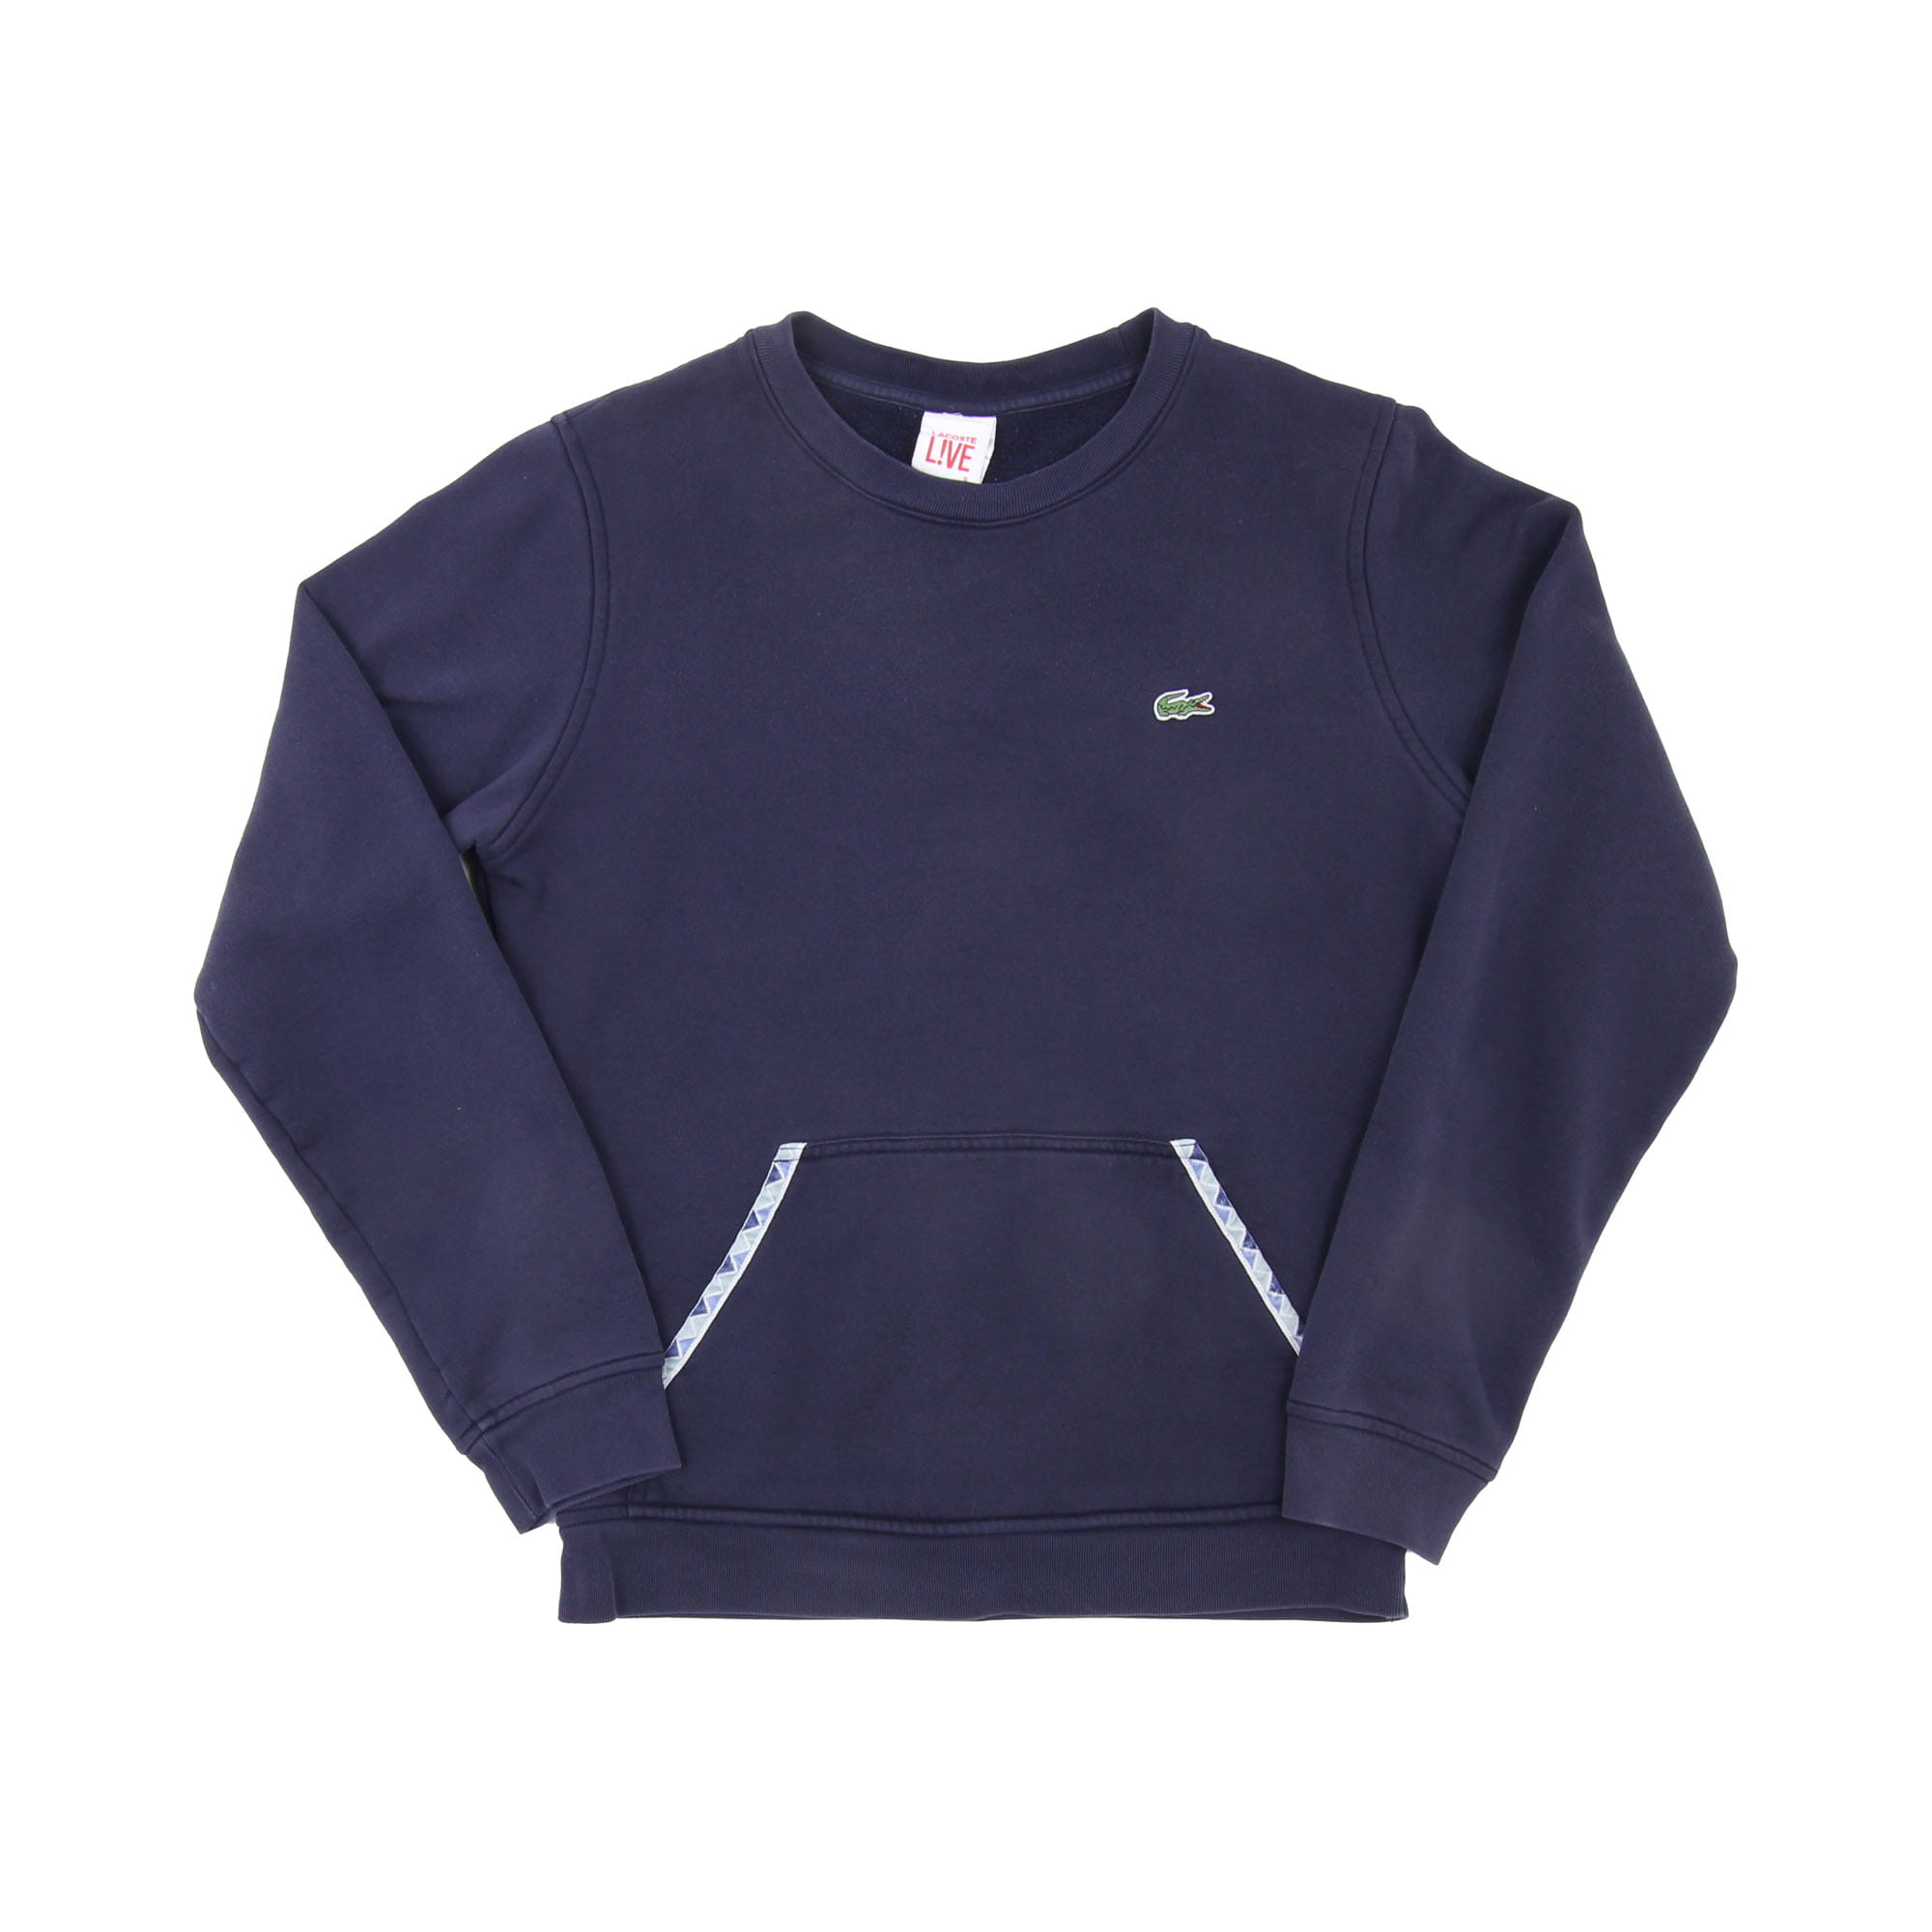 Lacoste Embroidered Logo Sweatshirt -  S/M